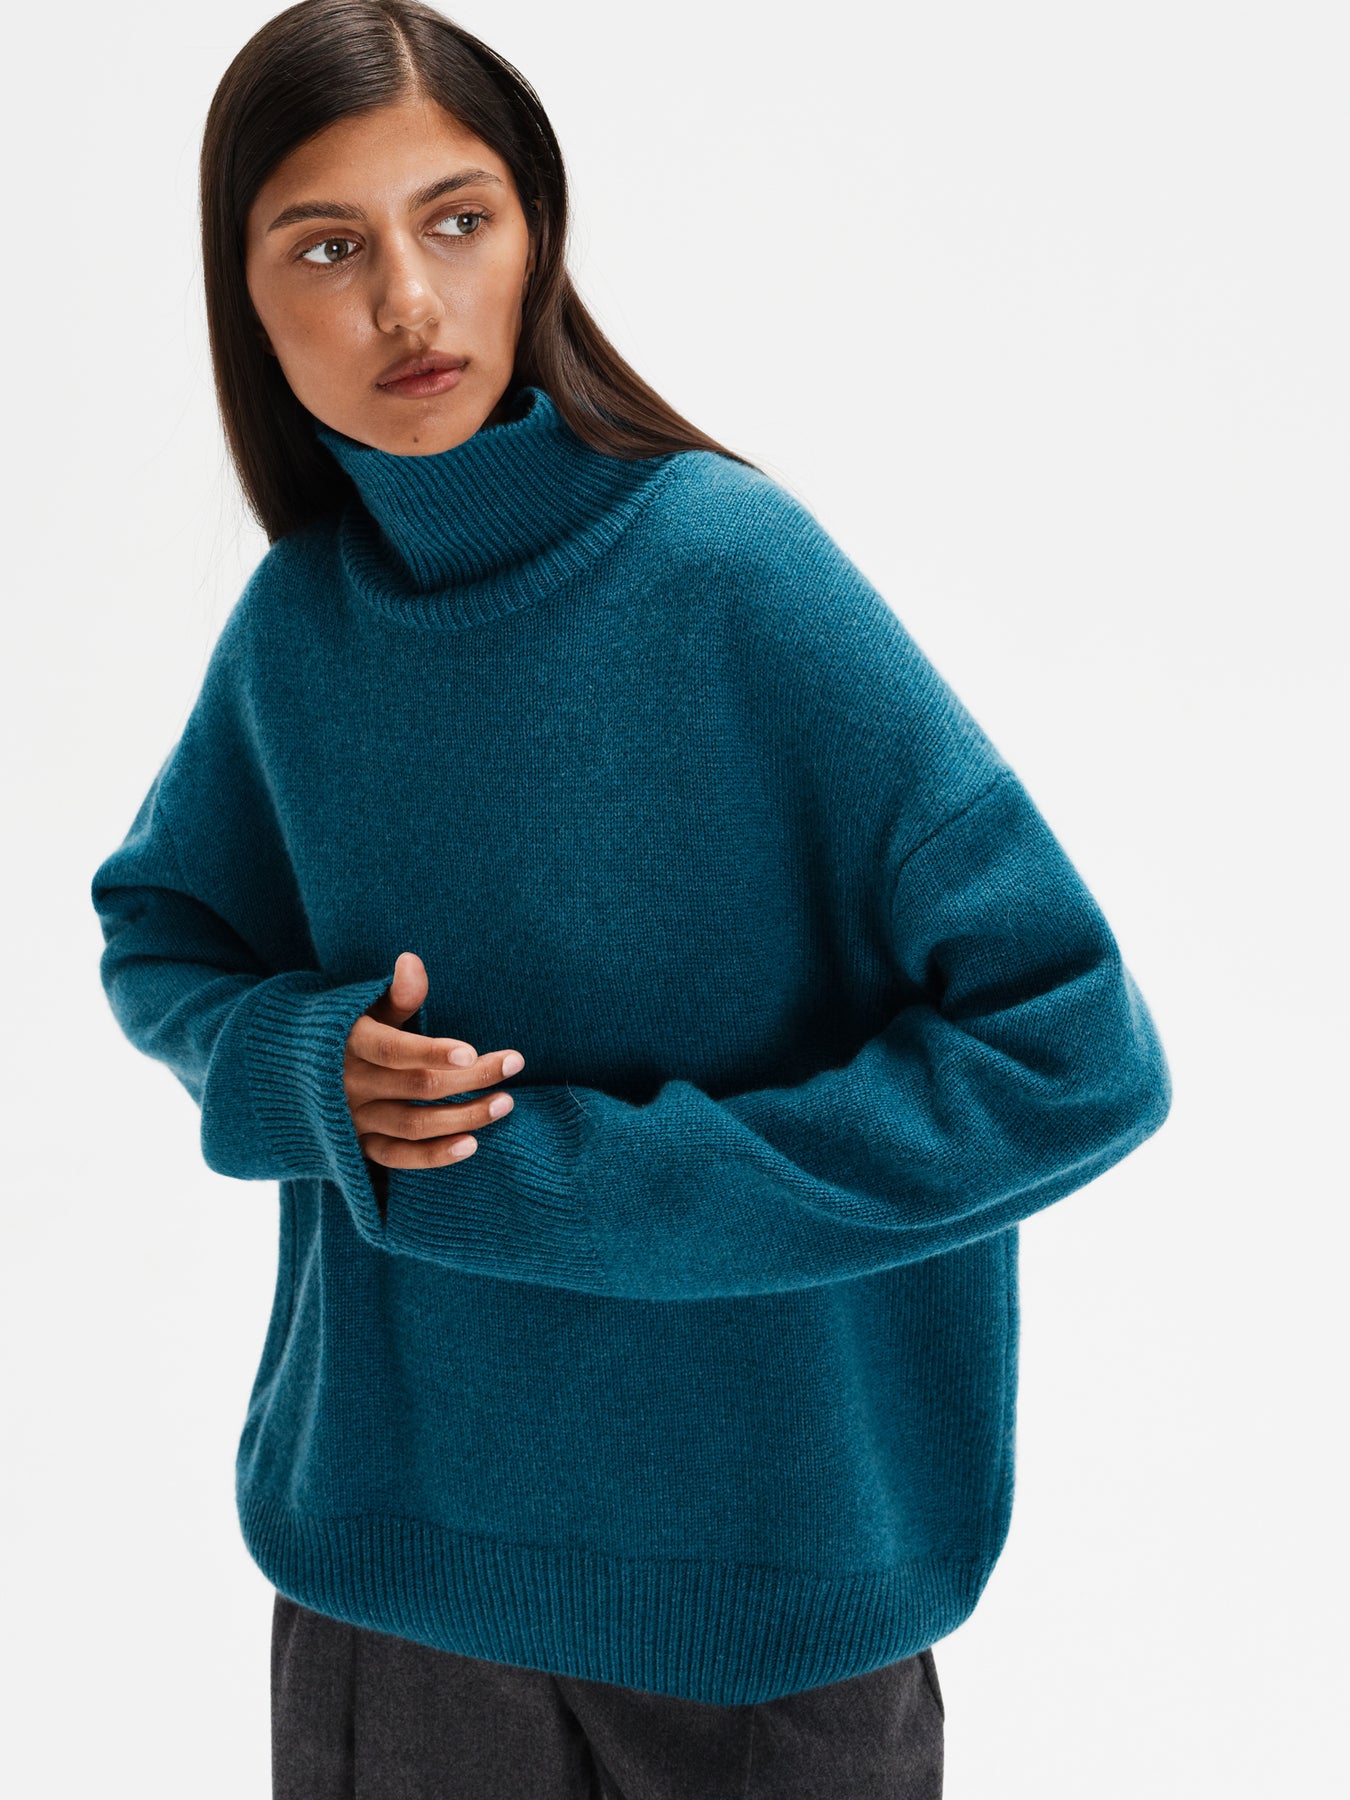 Lora turtleneck 100% cashmere sweater (aquamarine) – Weekend And Beyond